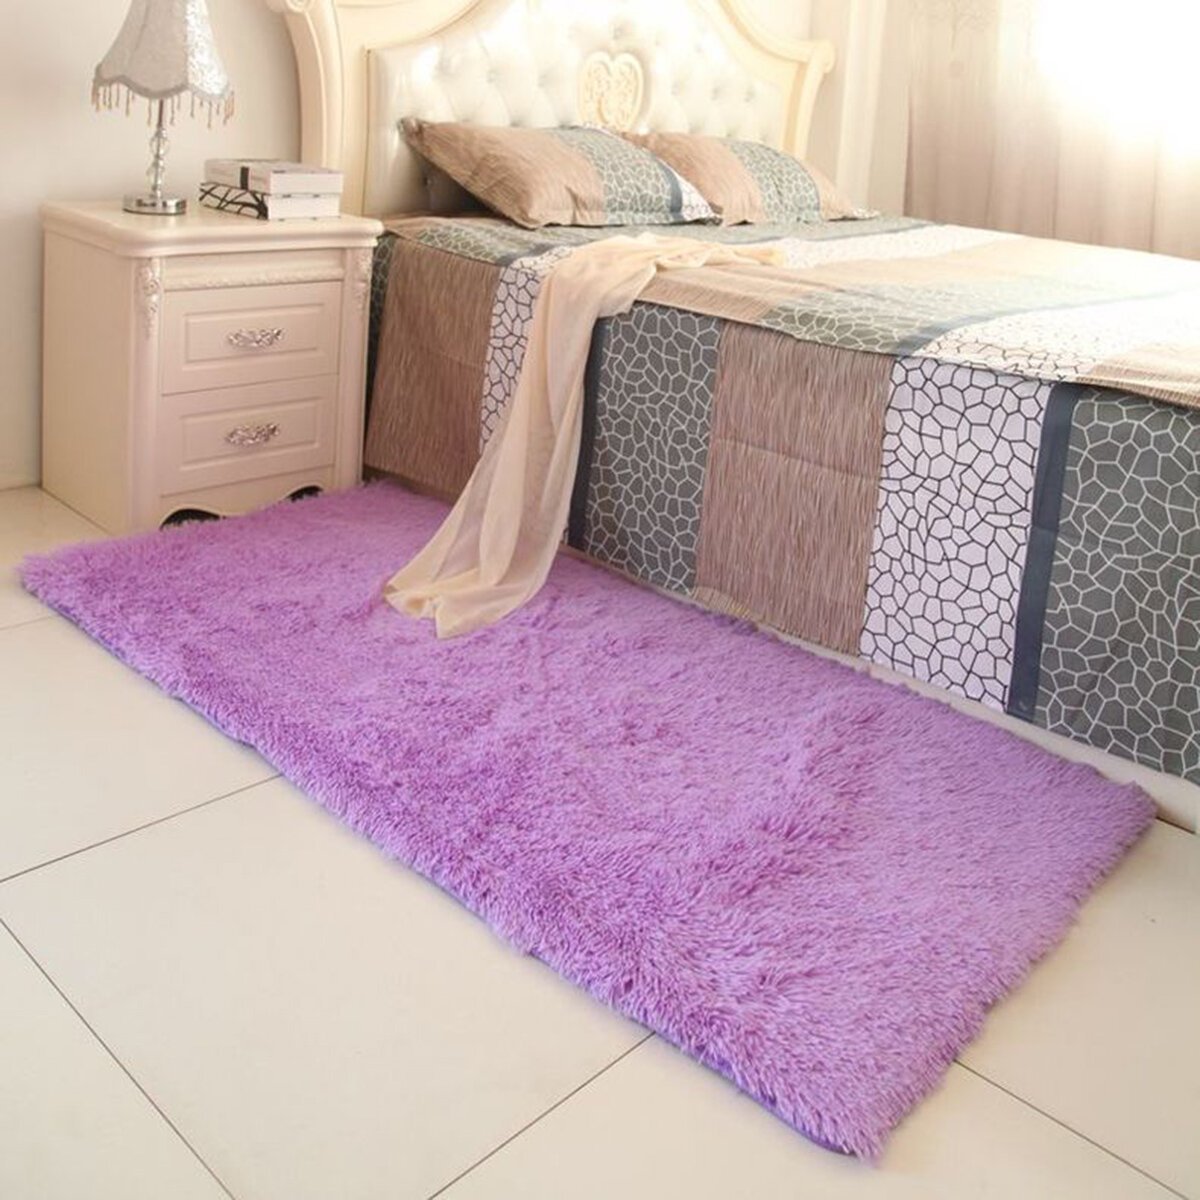 36''x24''Soft Fluffy Floor Rug Anti-skid Shaggy Area Rug Plush Non-slip Home Bedroom Living Room Carpet